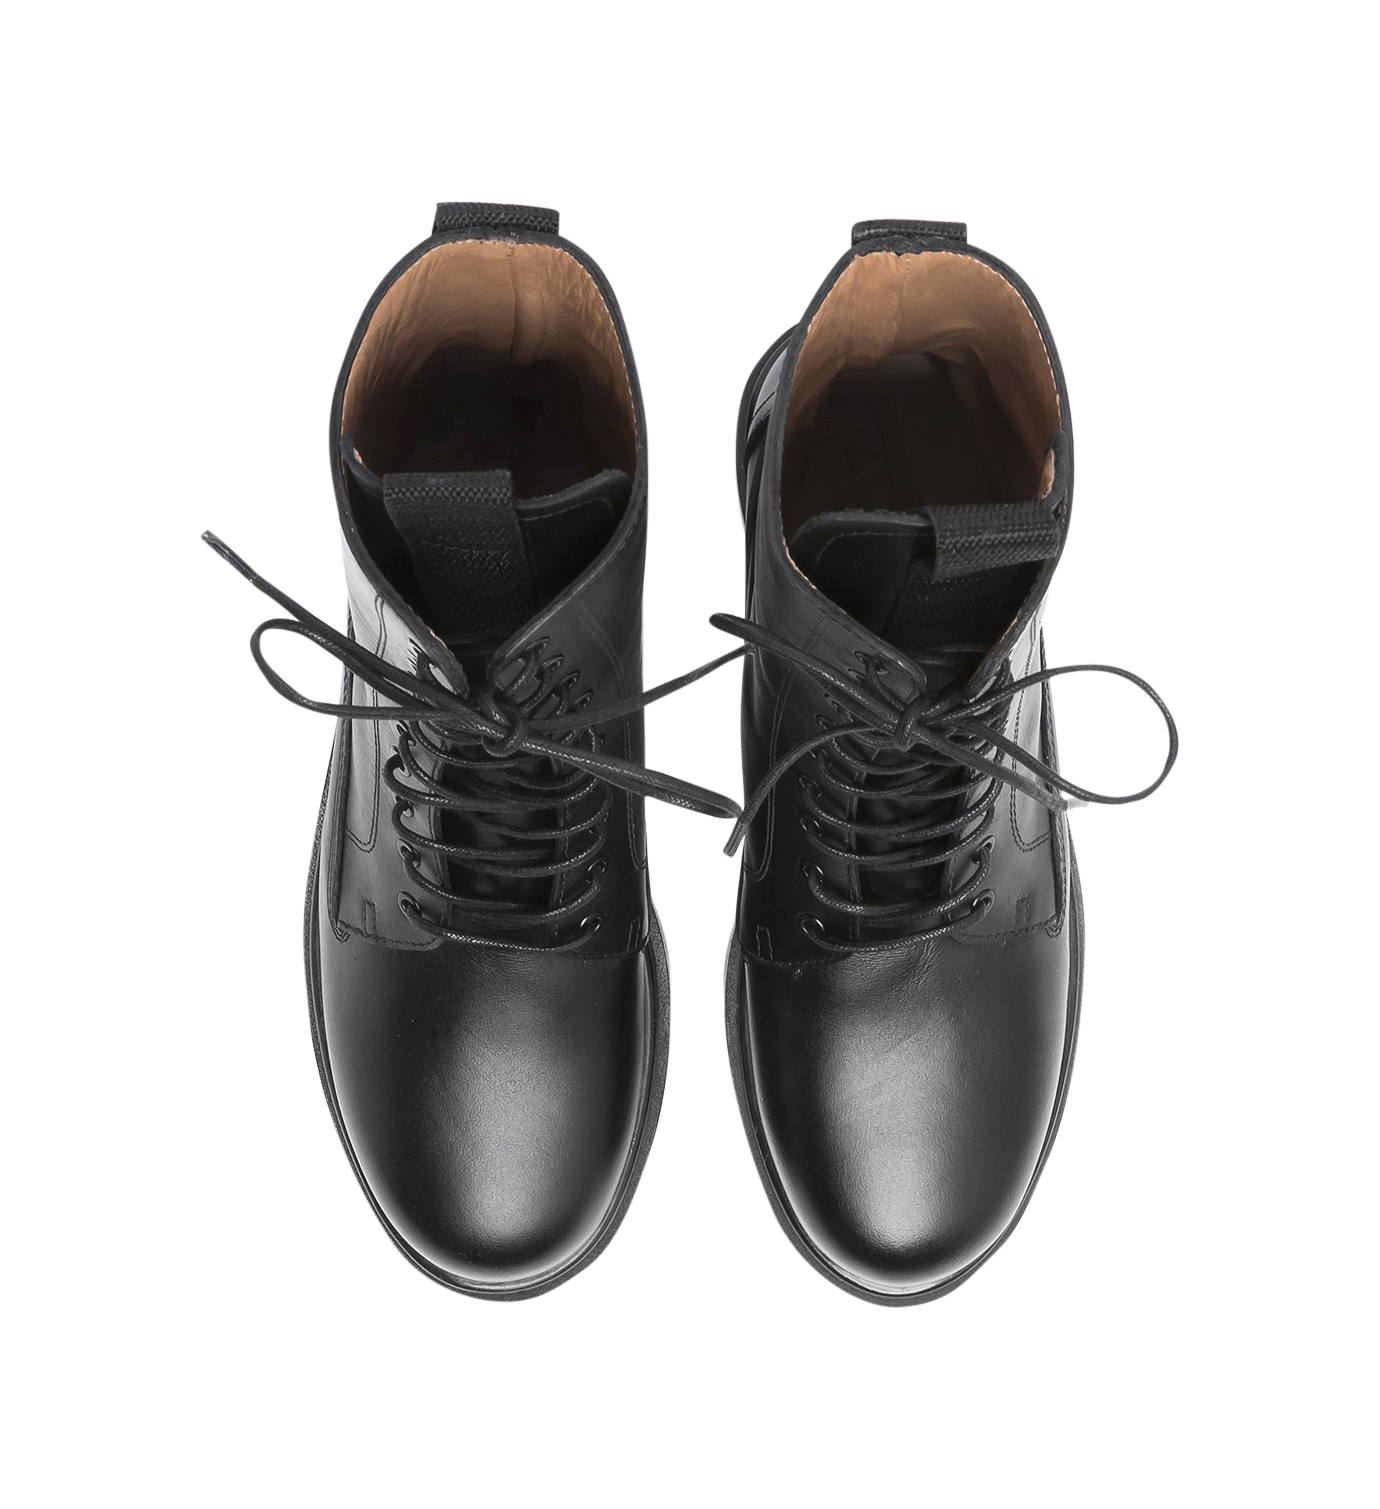 Lovi Black Leather Boots 20020815101-001 - 05